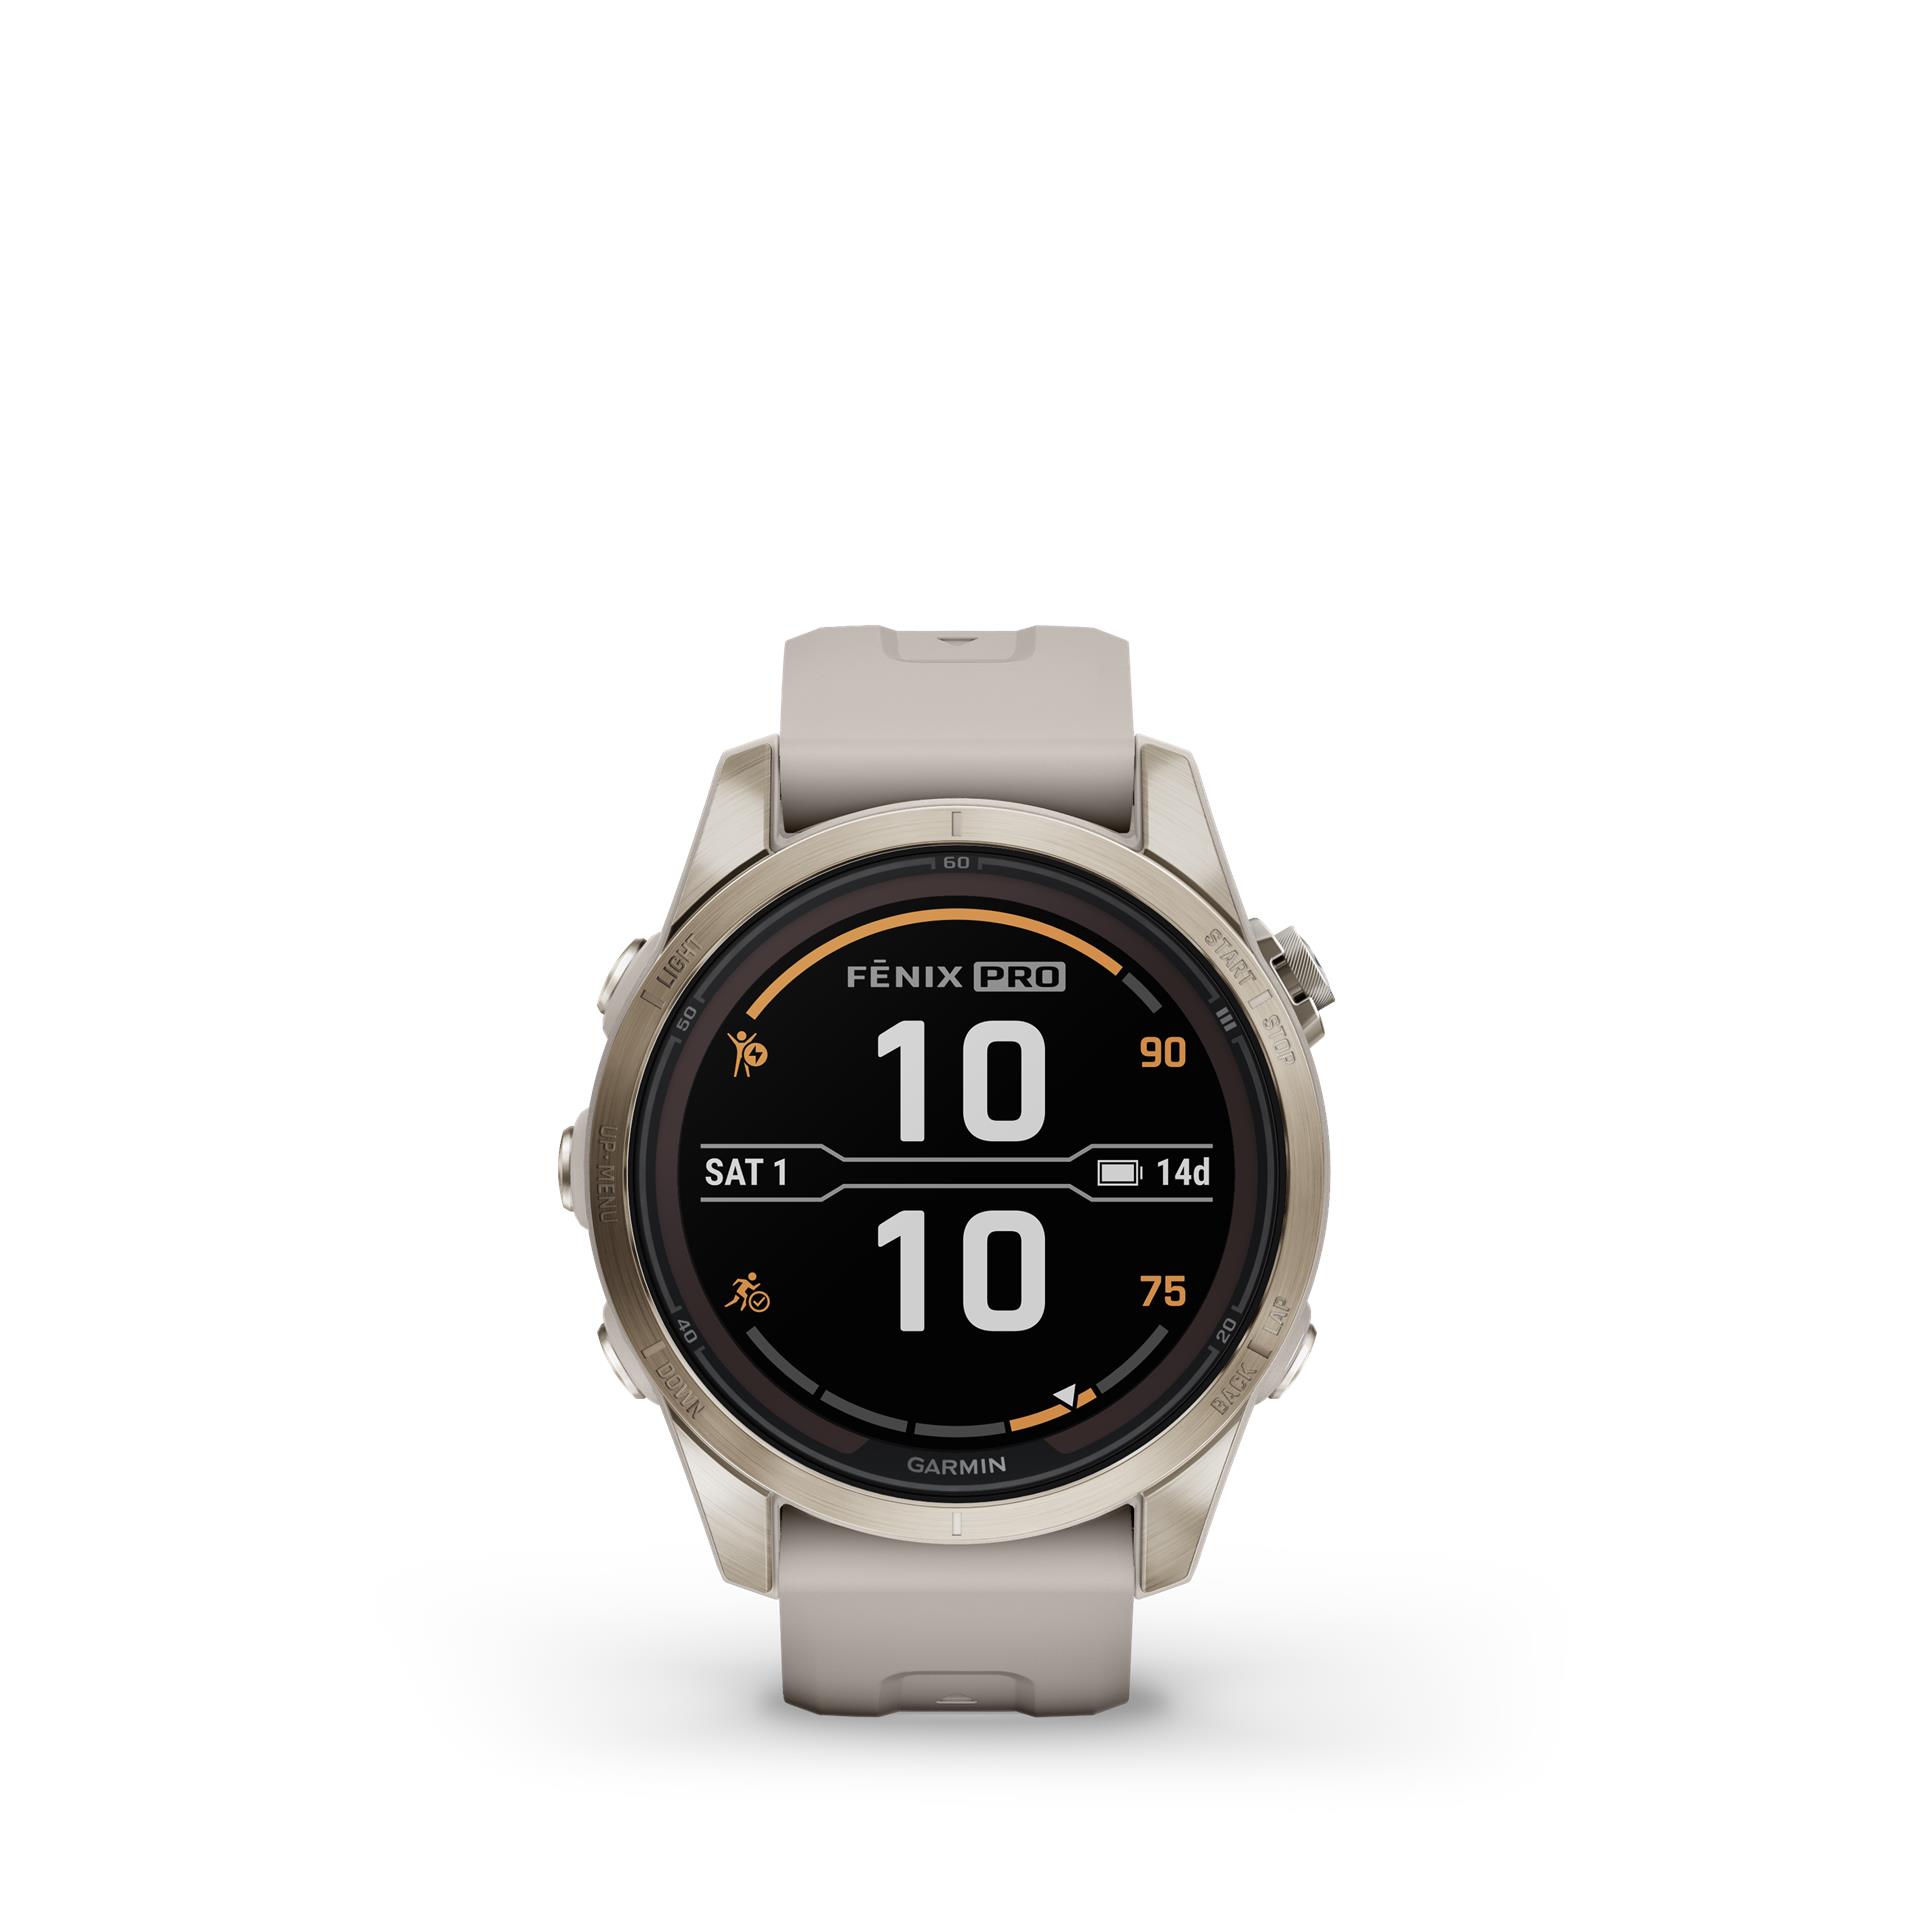 Garmin fēnix 7S Pro Sapphire Solar смарт-часы, 42 mm, Мягкое золото/Песок